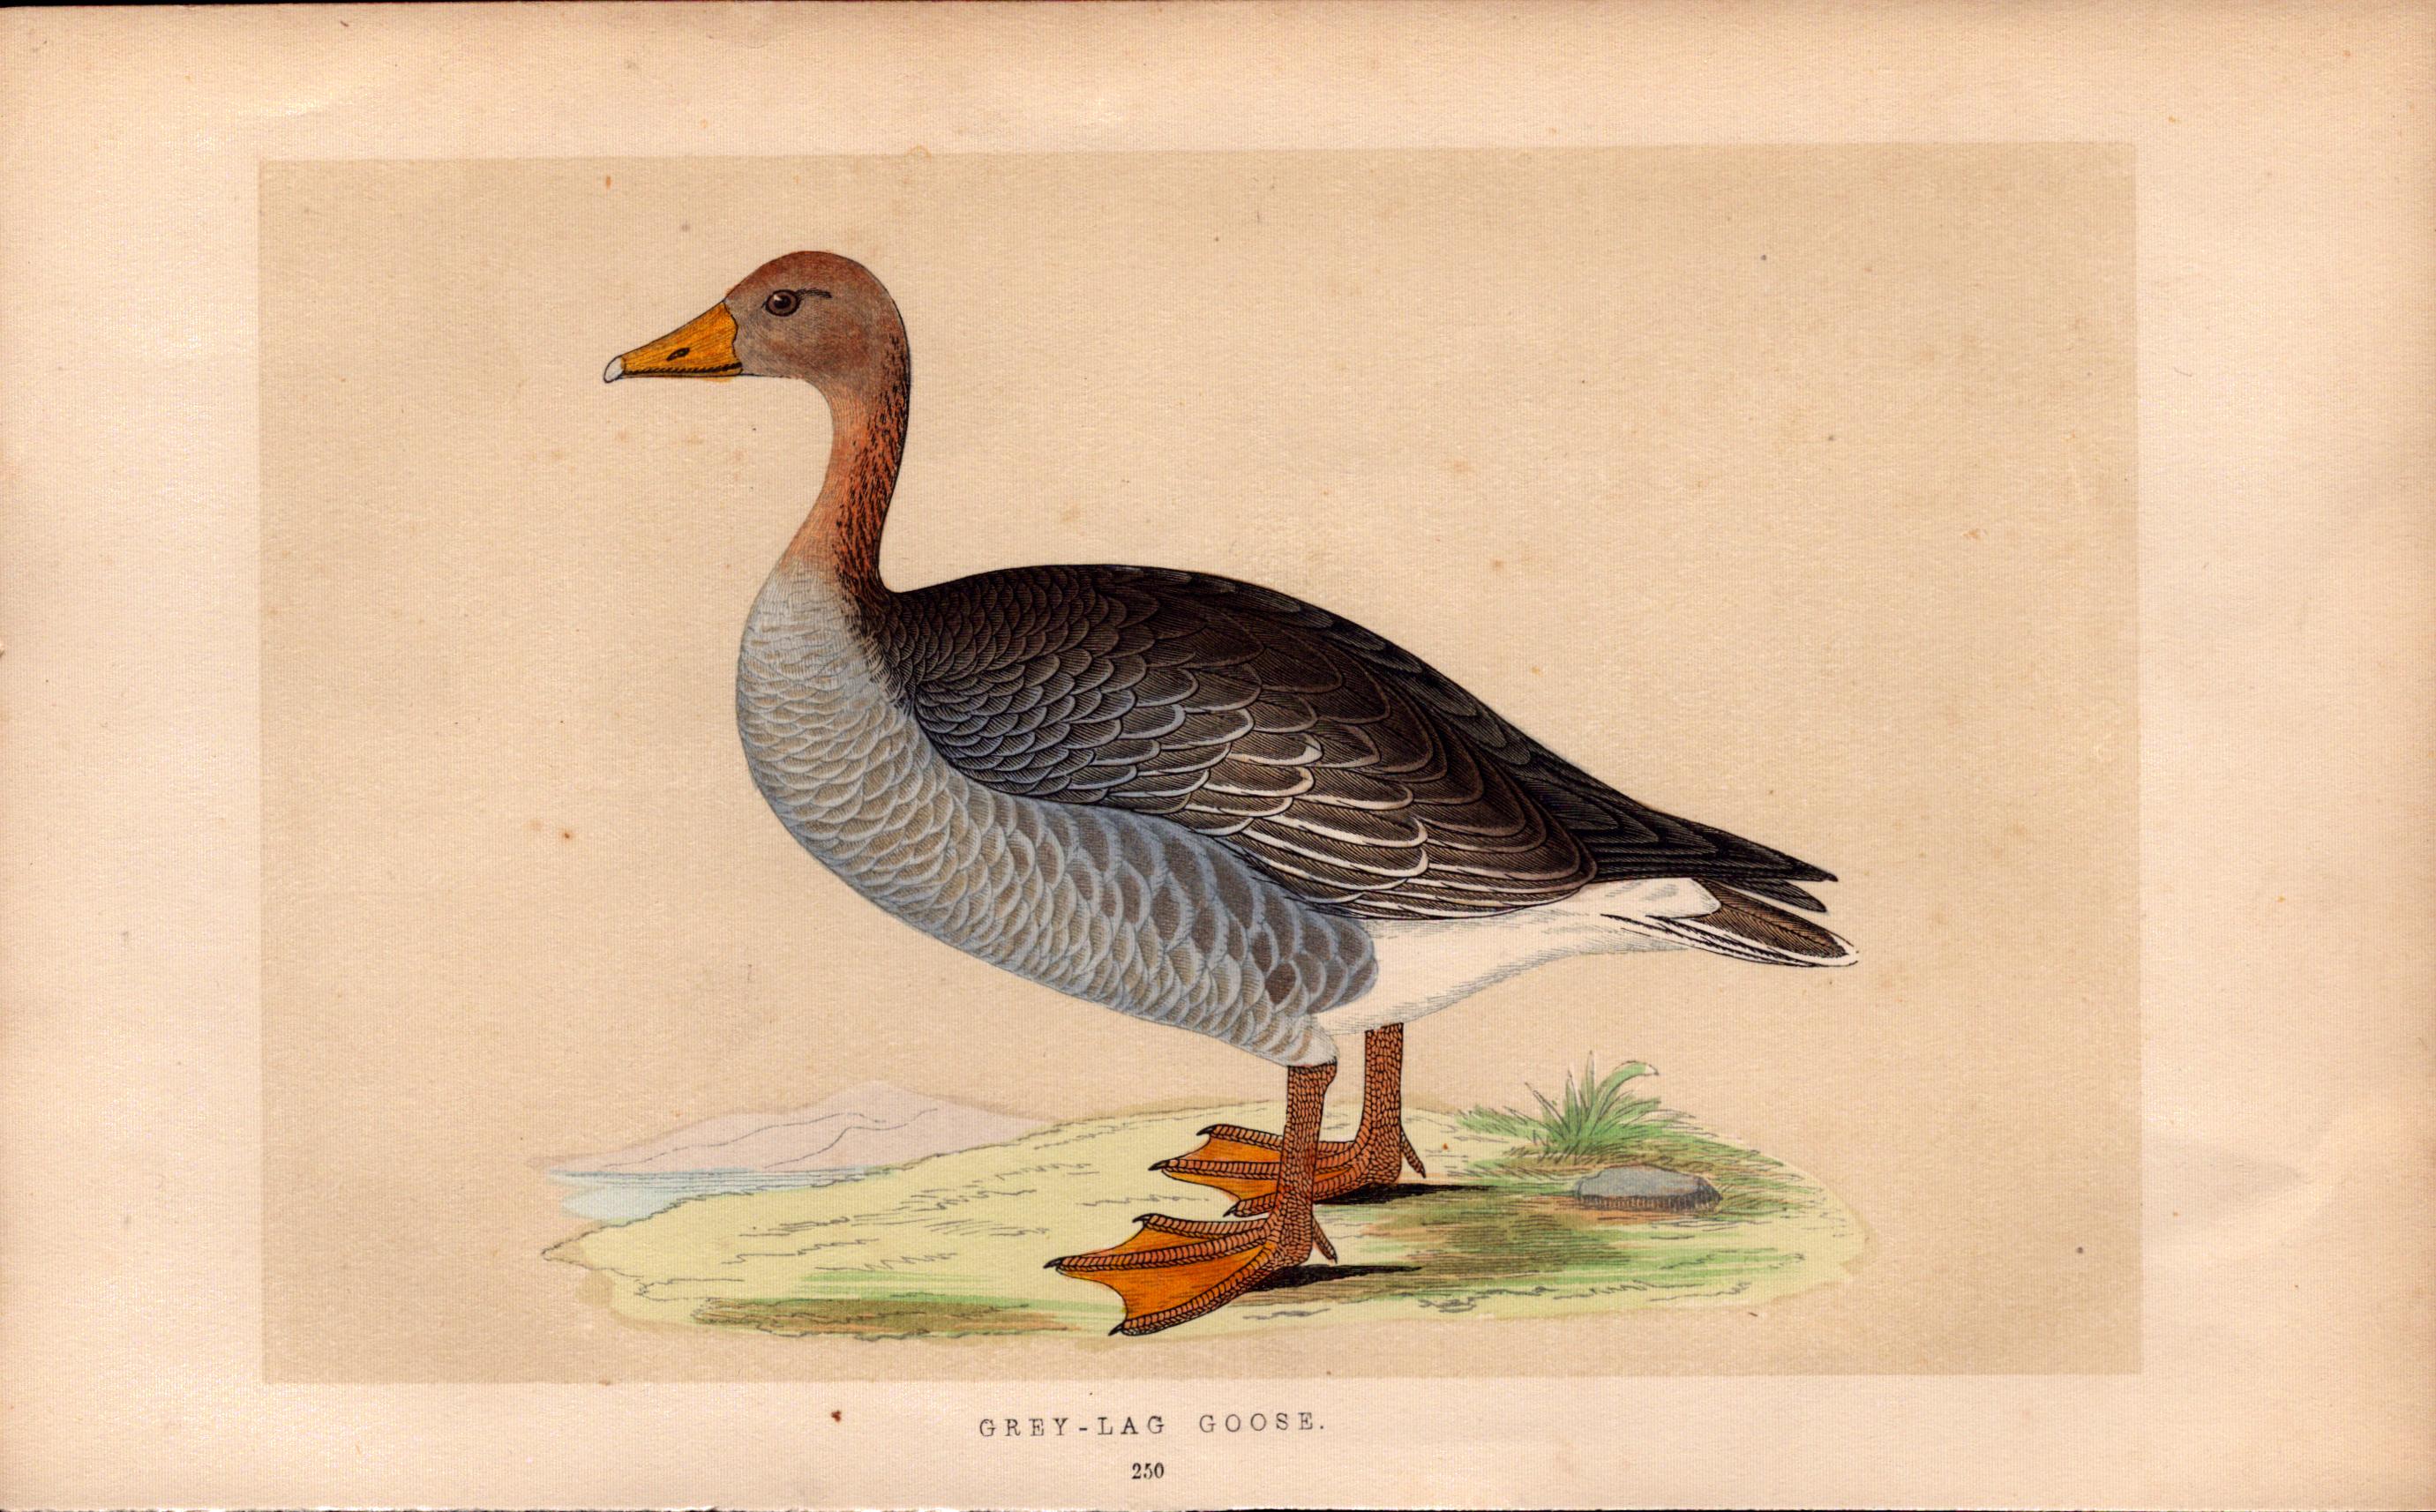 Grey Leg Goose Rev Morris Antique History of British Birds Engraving.